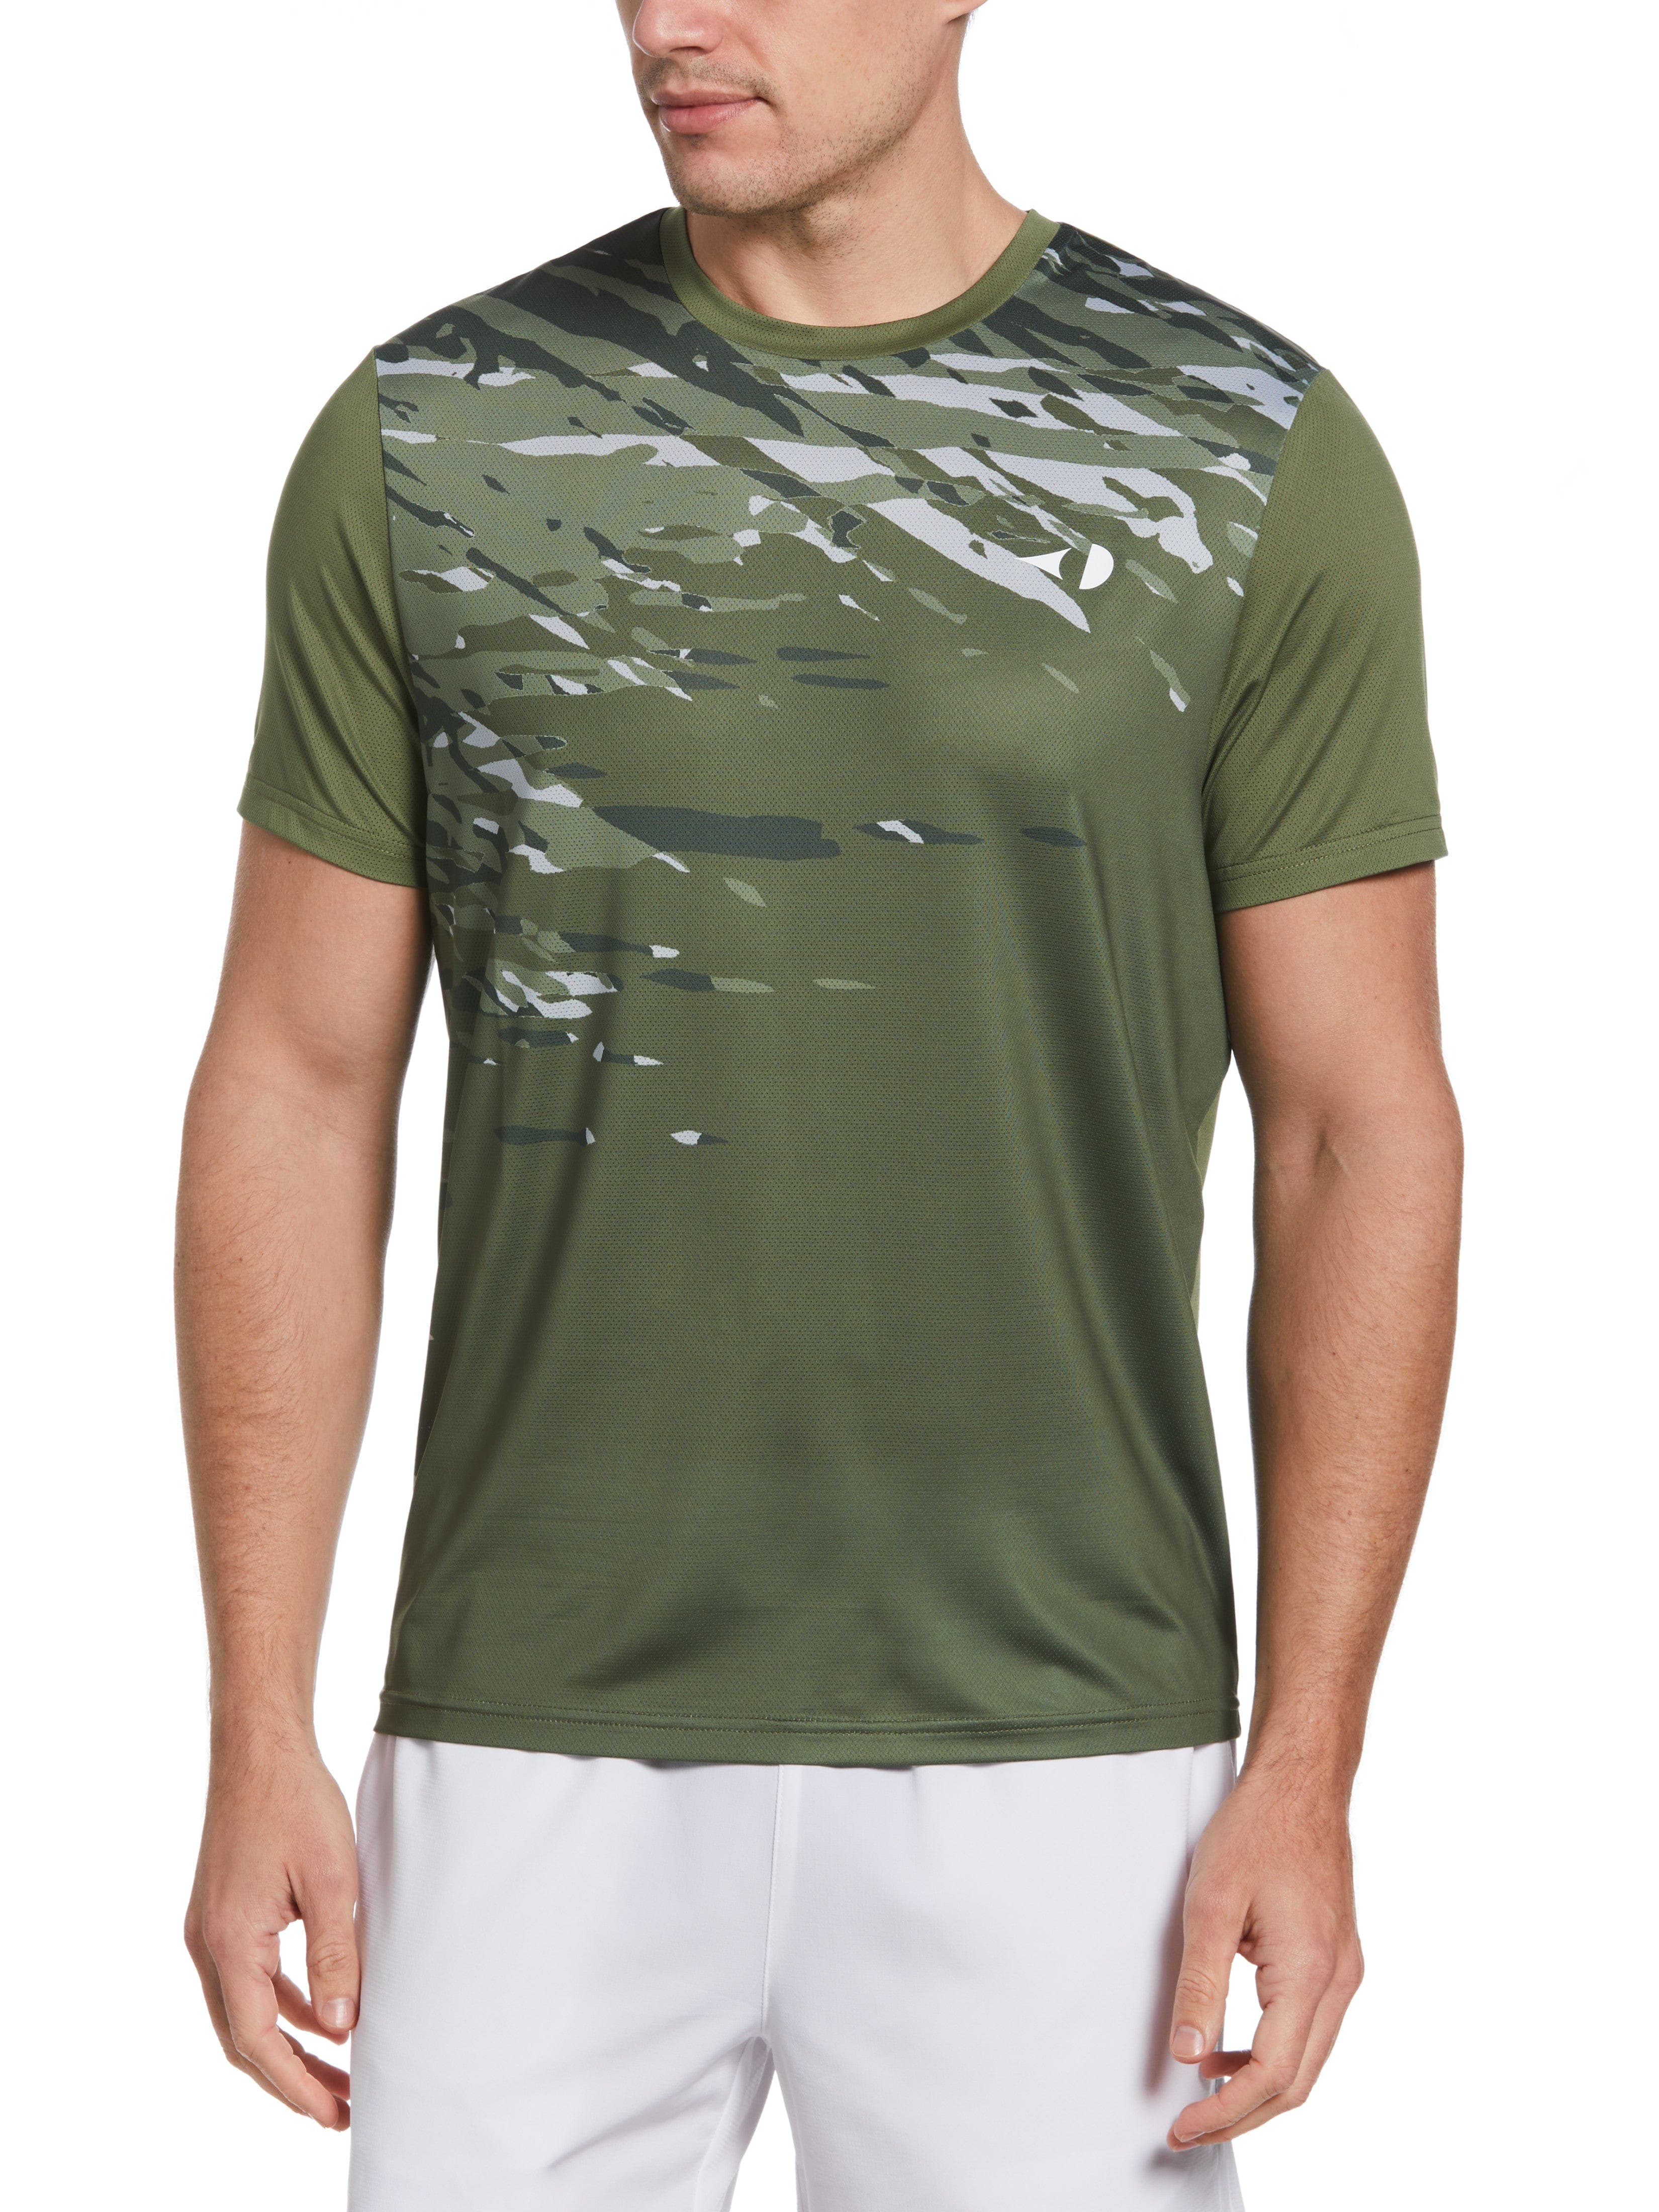 Grand Slam Mens Asymmetric Camo Print Tennis T-Shirt, Size Large, Olivine Green, Polyester/Spandex | Golf Apparel Shop